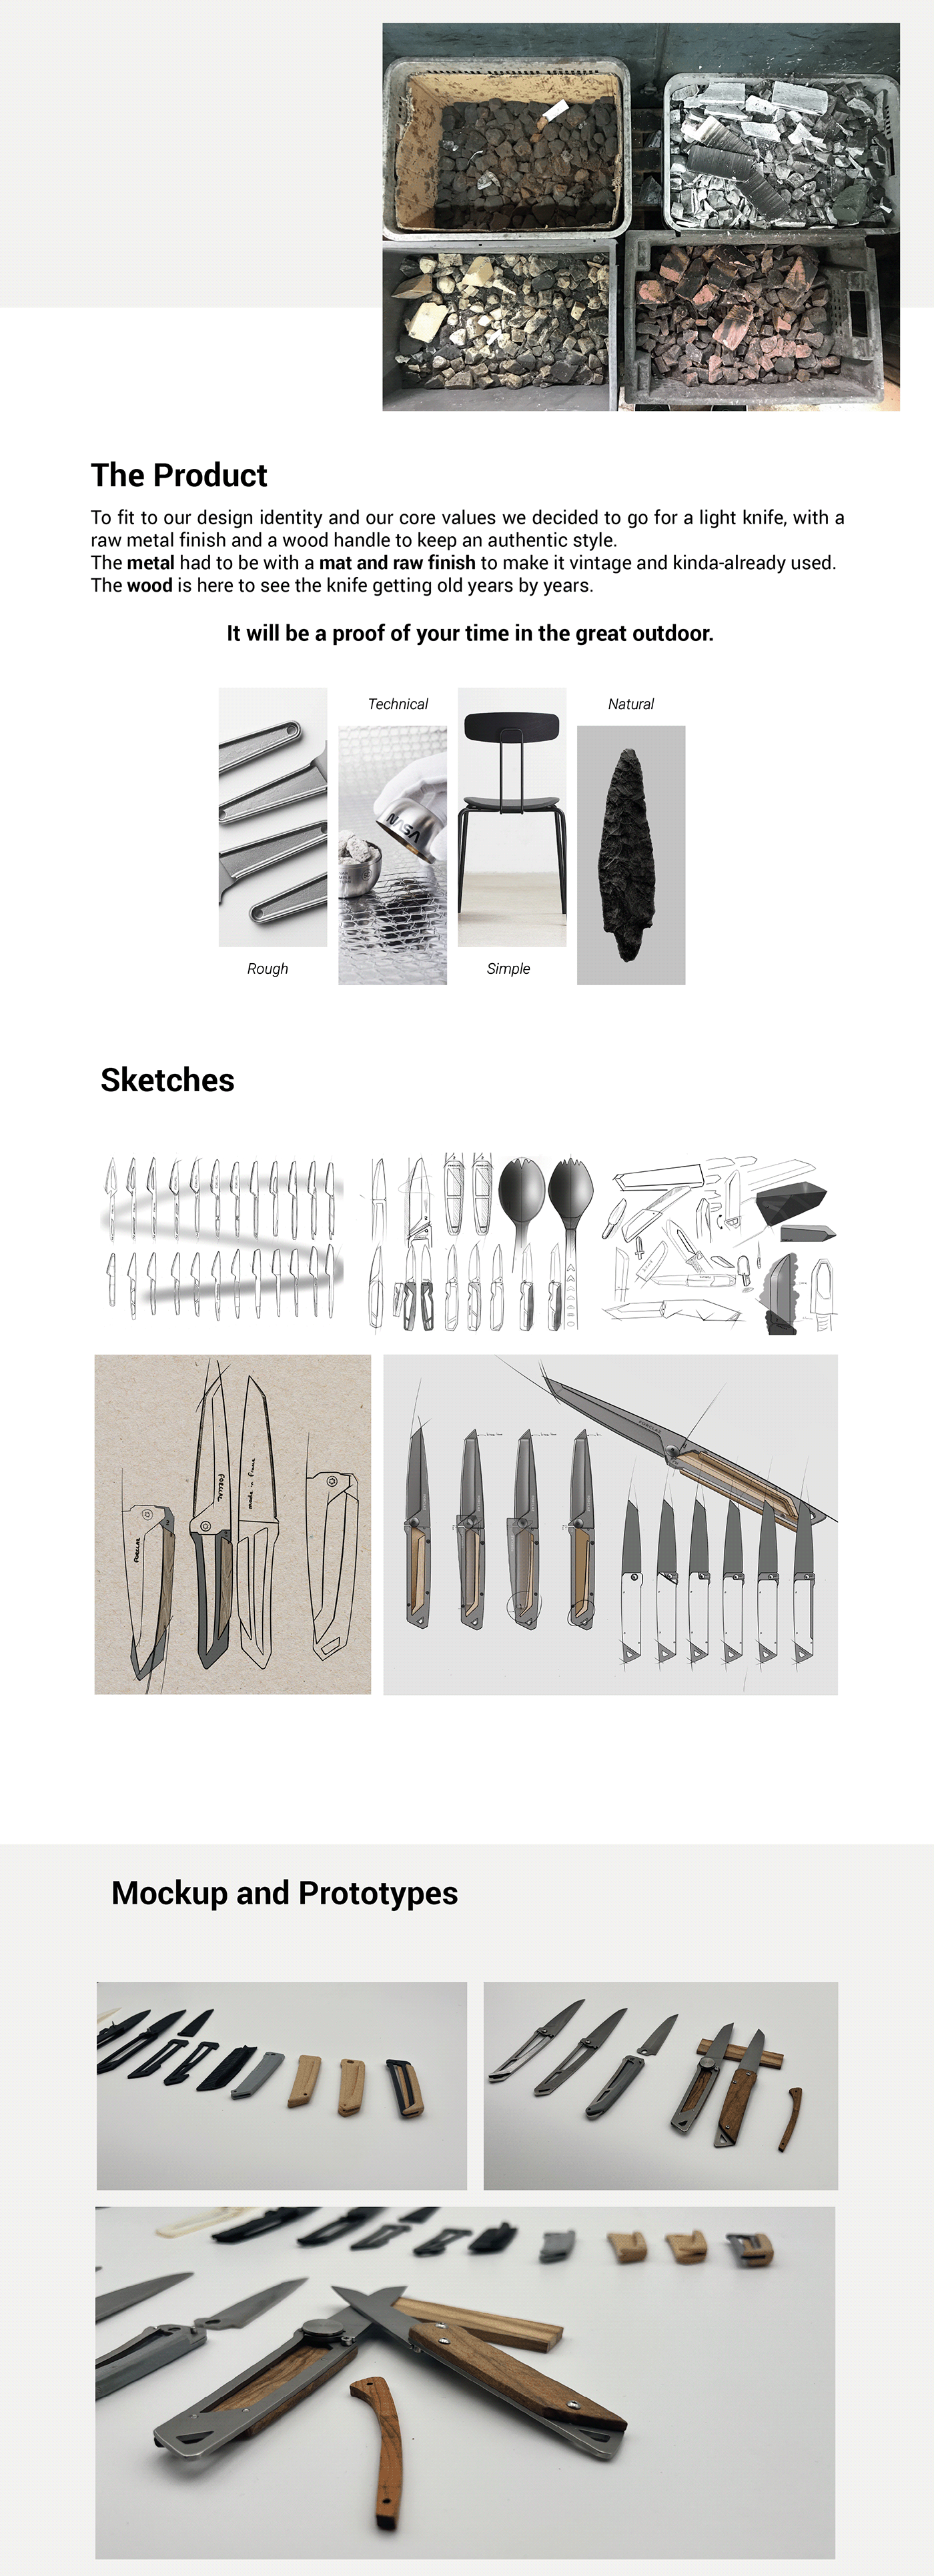 sports Outdoor hiking knife decathlon metal wood 3D sketch industrial design 